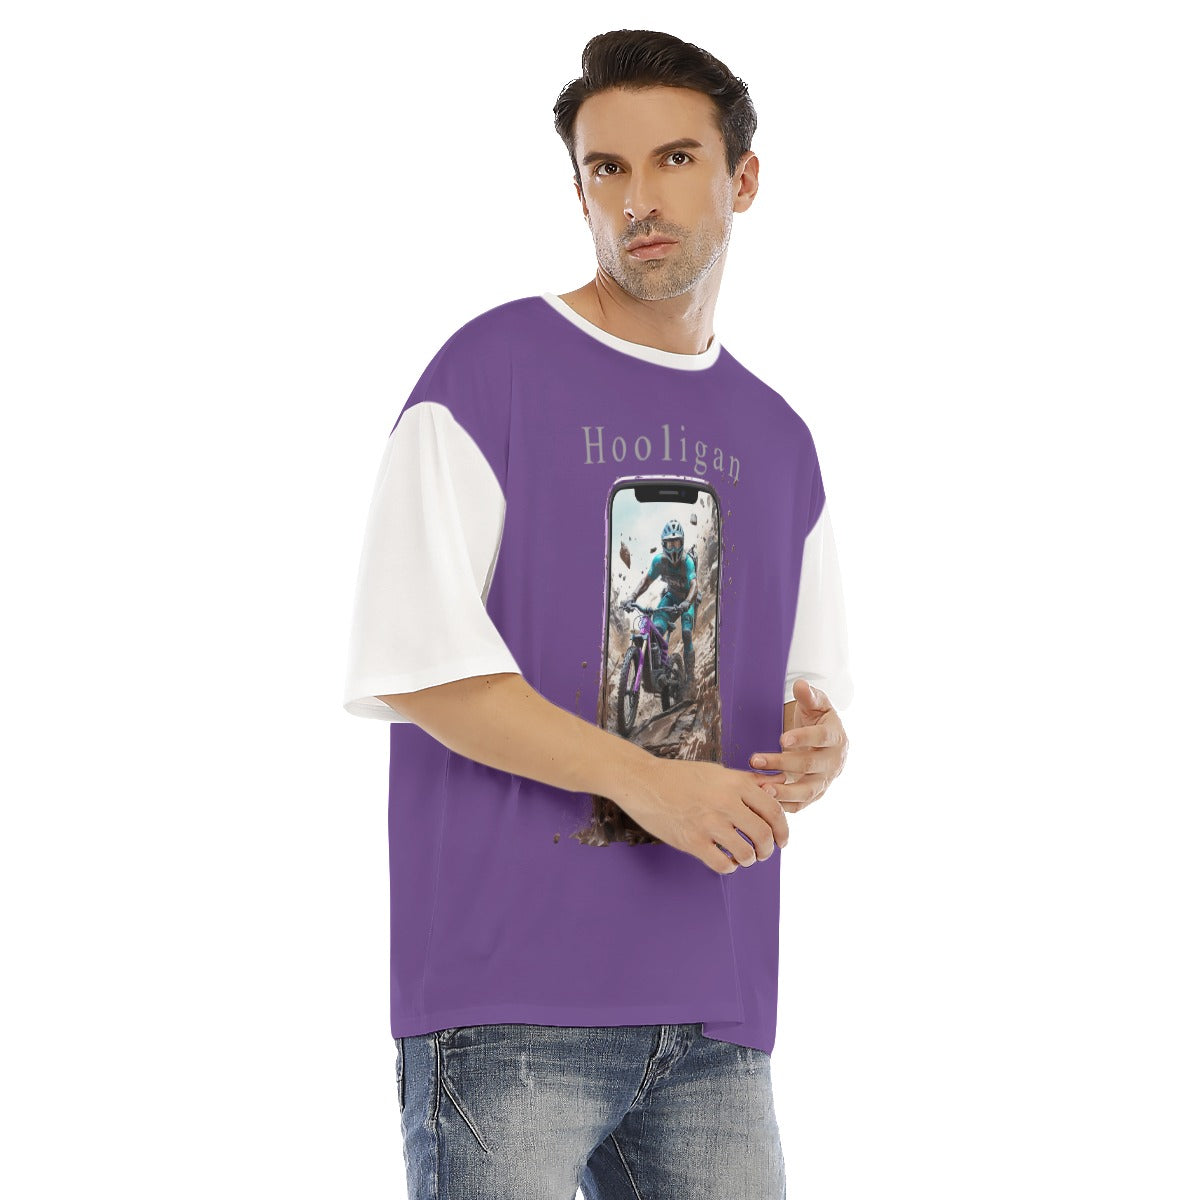 All-Over Print Men's Drop Shoulder T-shirt With Short Sleeve